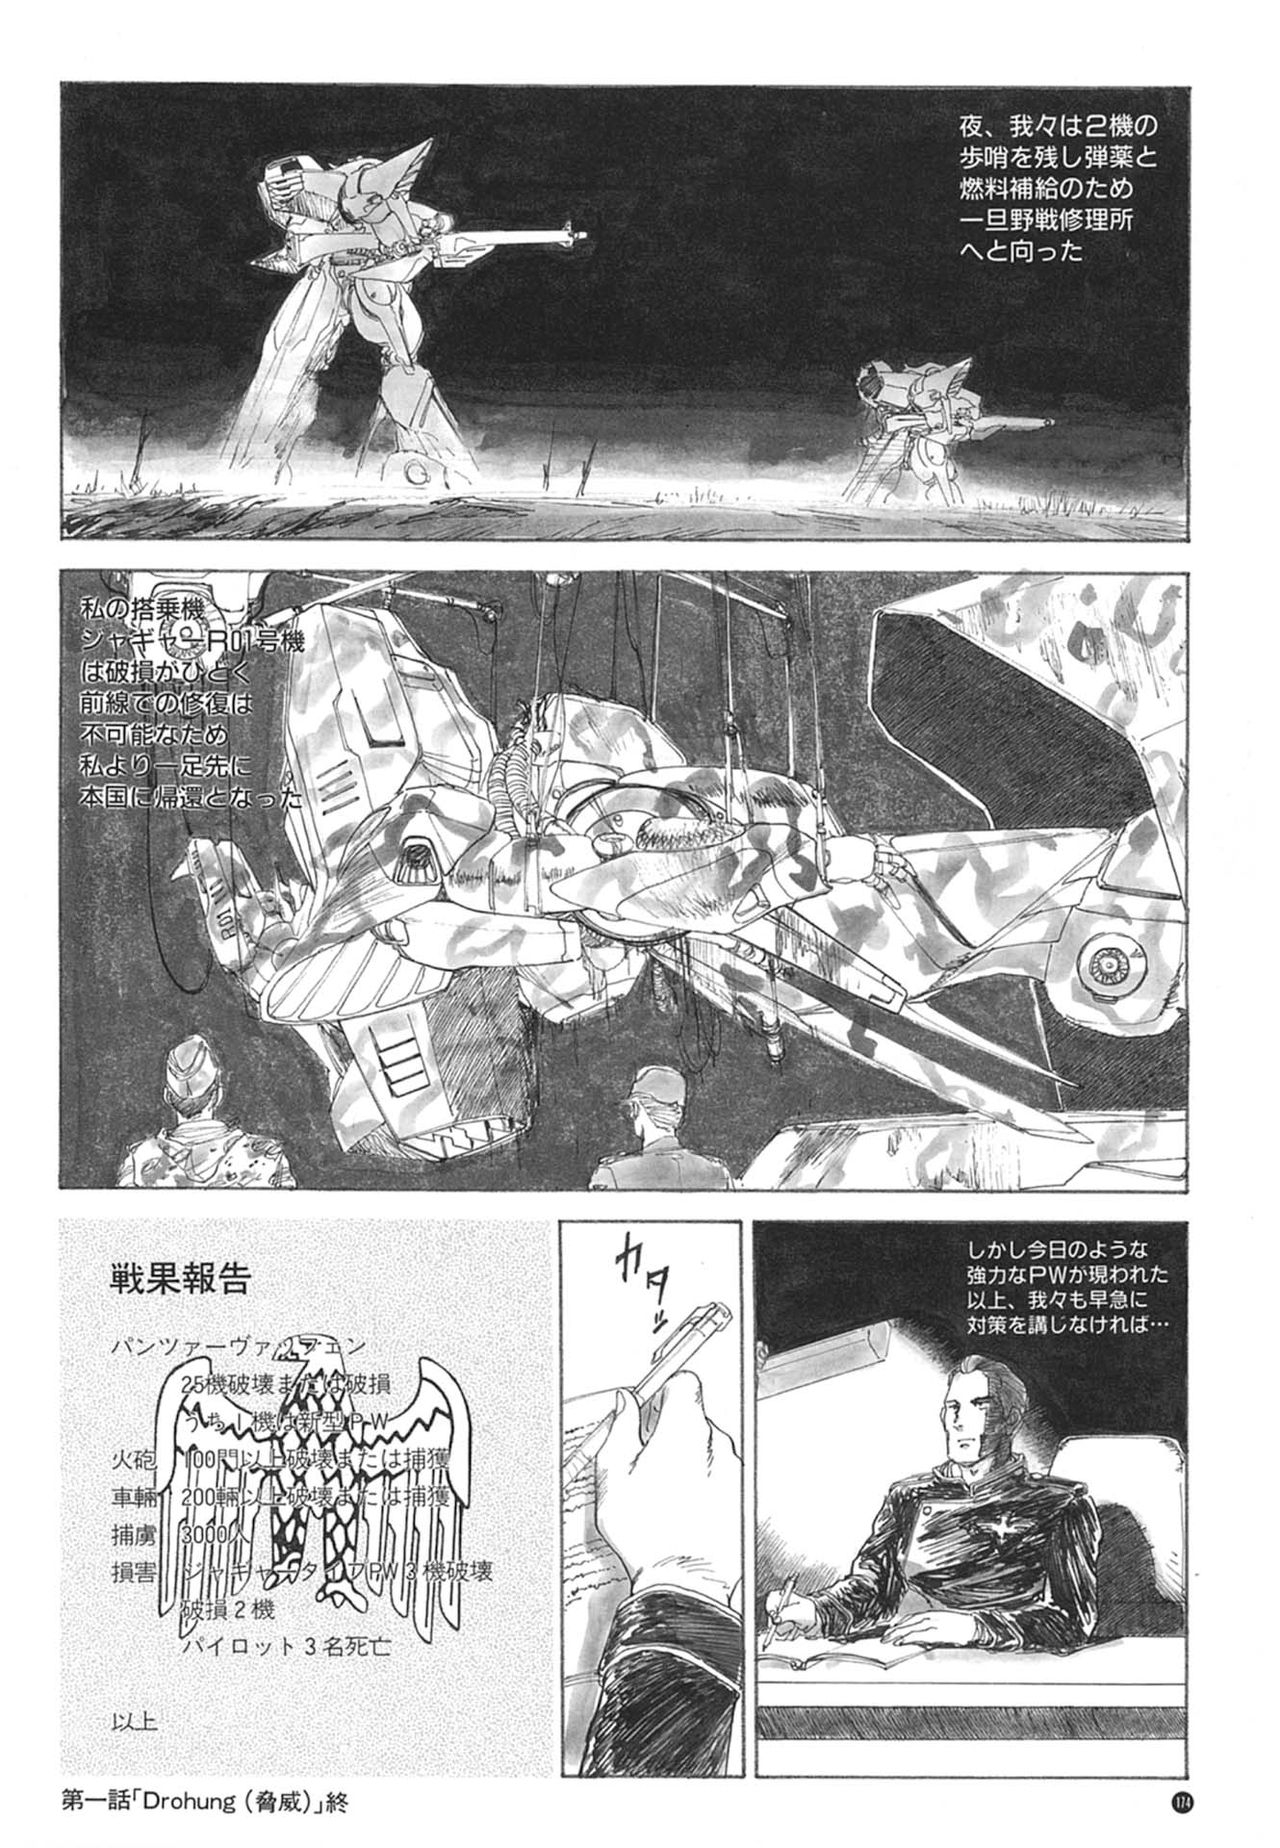 [Kazuhisa Kondo] Kazuhisa Kondo 2D & 3D Works - Go Ahead - From Mobile Suit Gundam to Original Mechanism 173